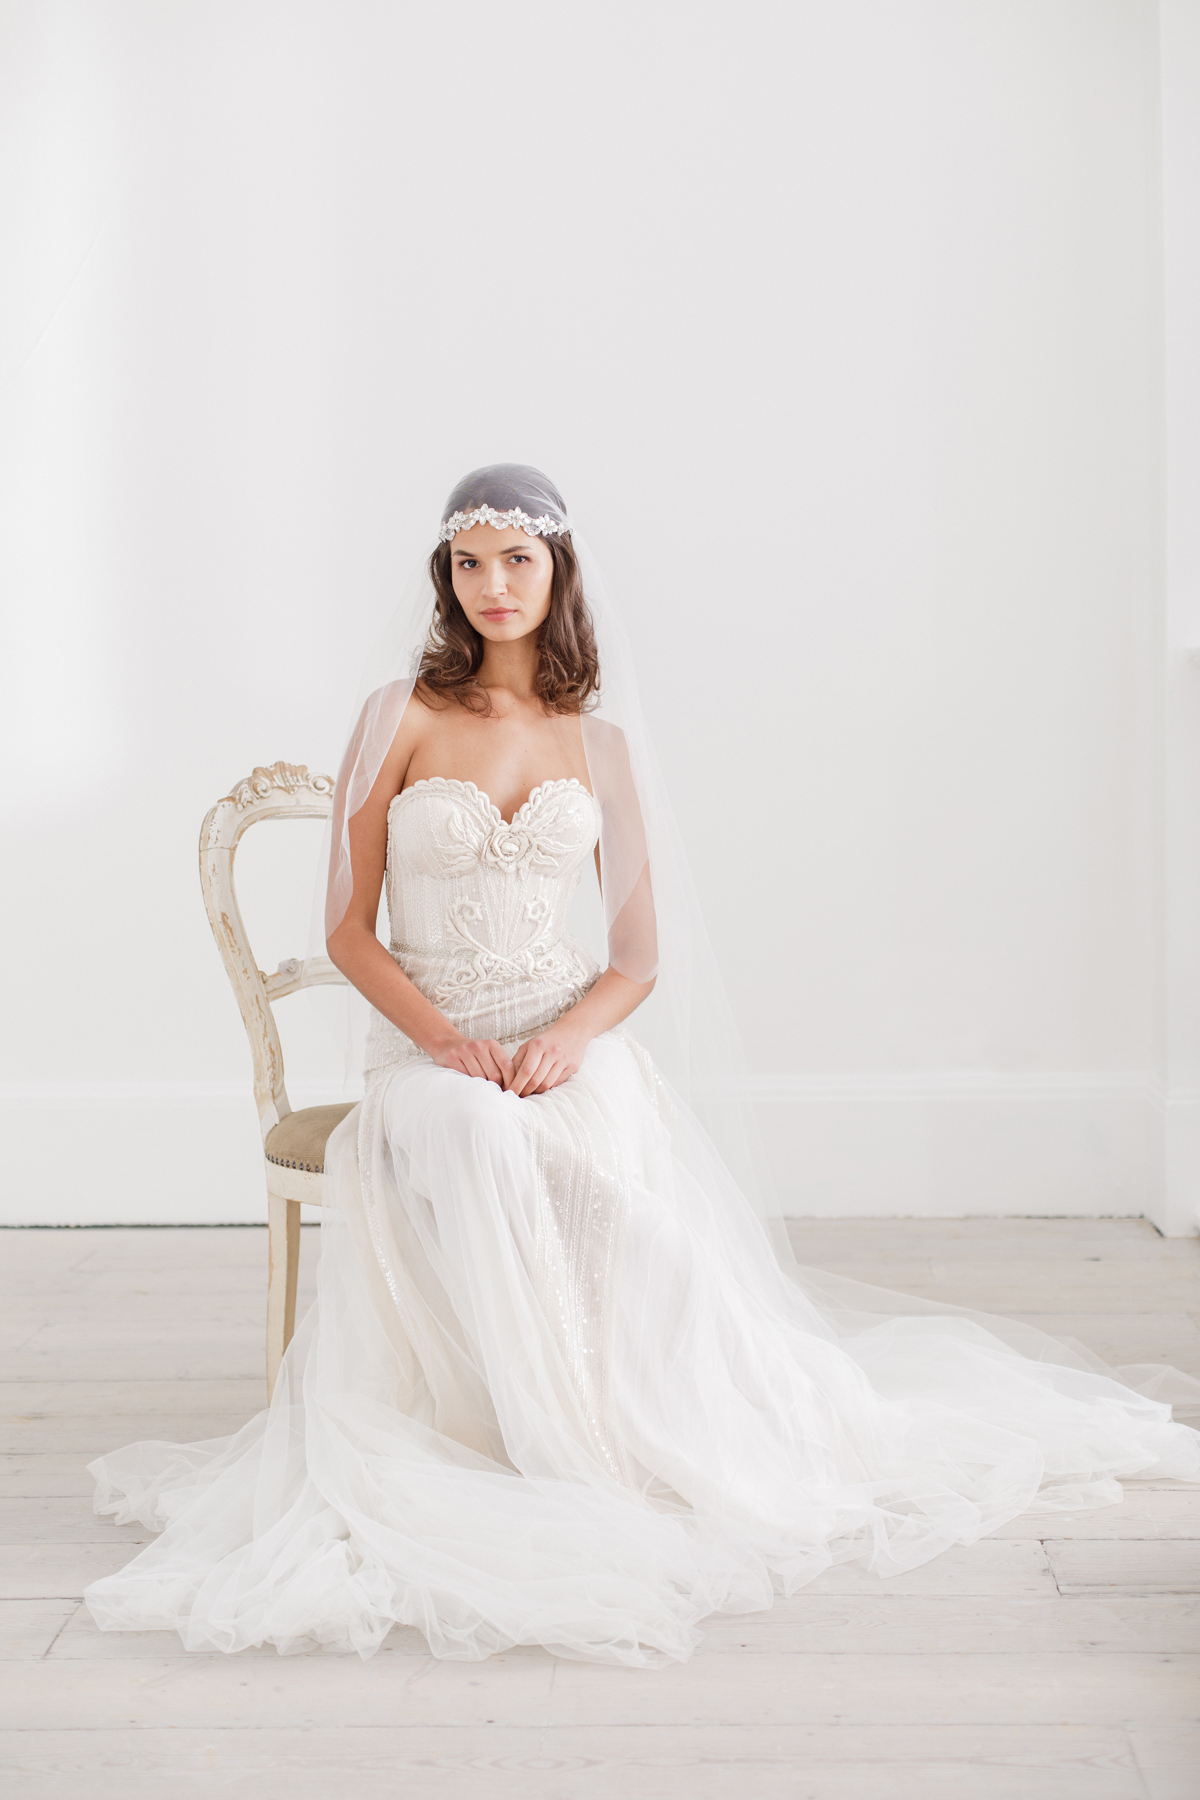 Mai crystal beaded Juliet cap veil. Dress by Inbal Dror at Morgan Davies